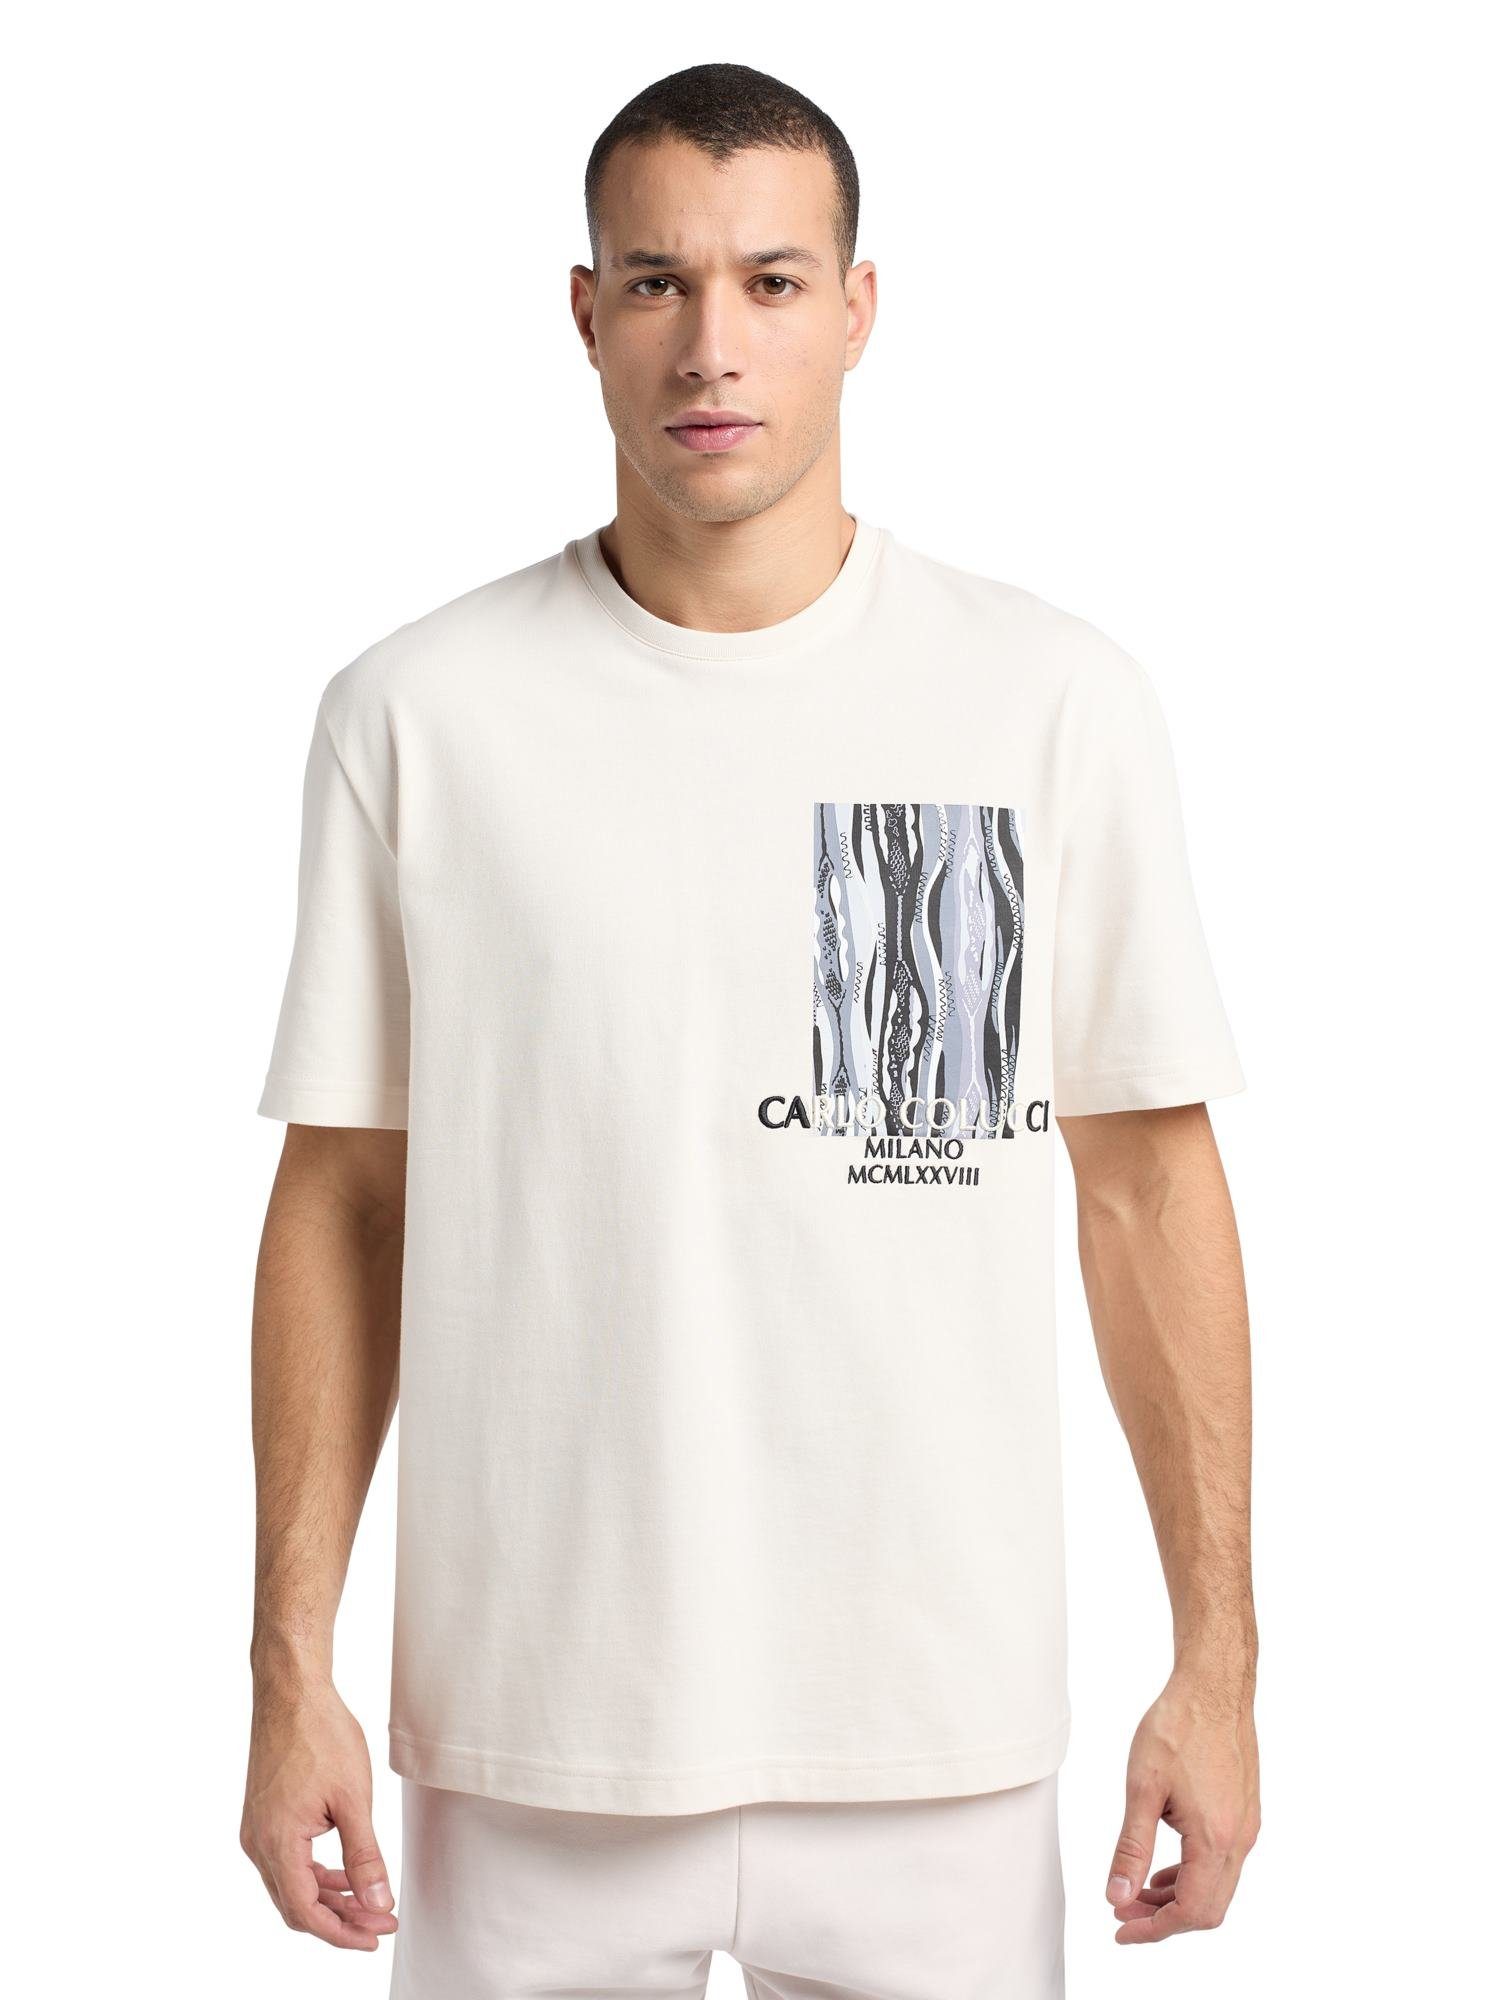 CARLO COLUCCI T-Shirt De Pandis Weiß